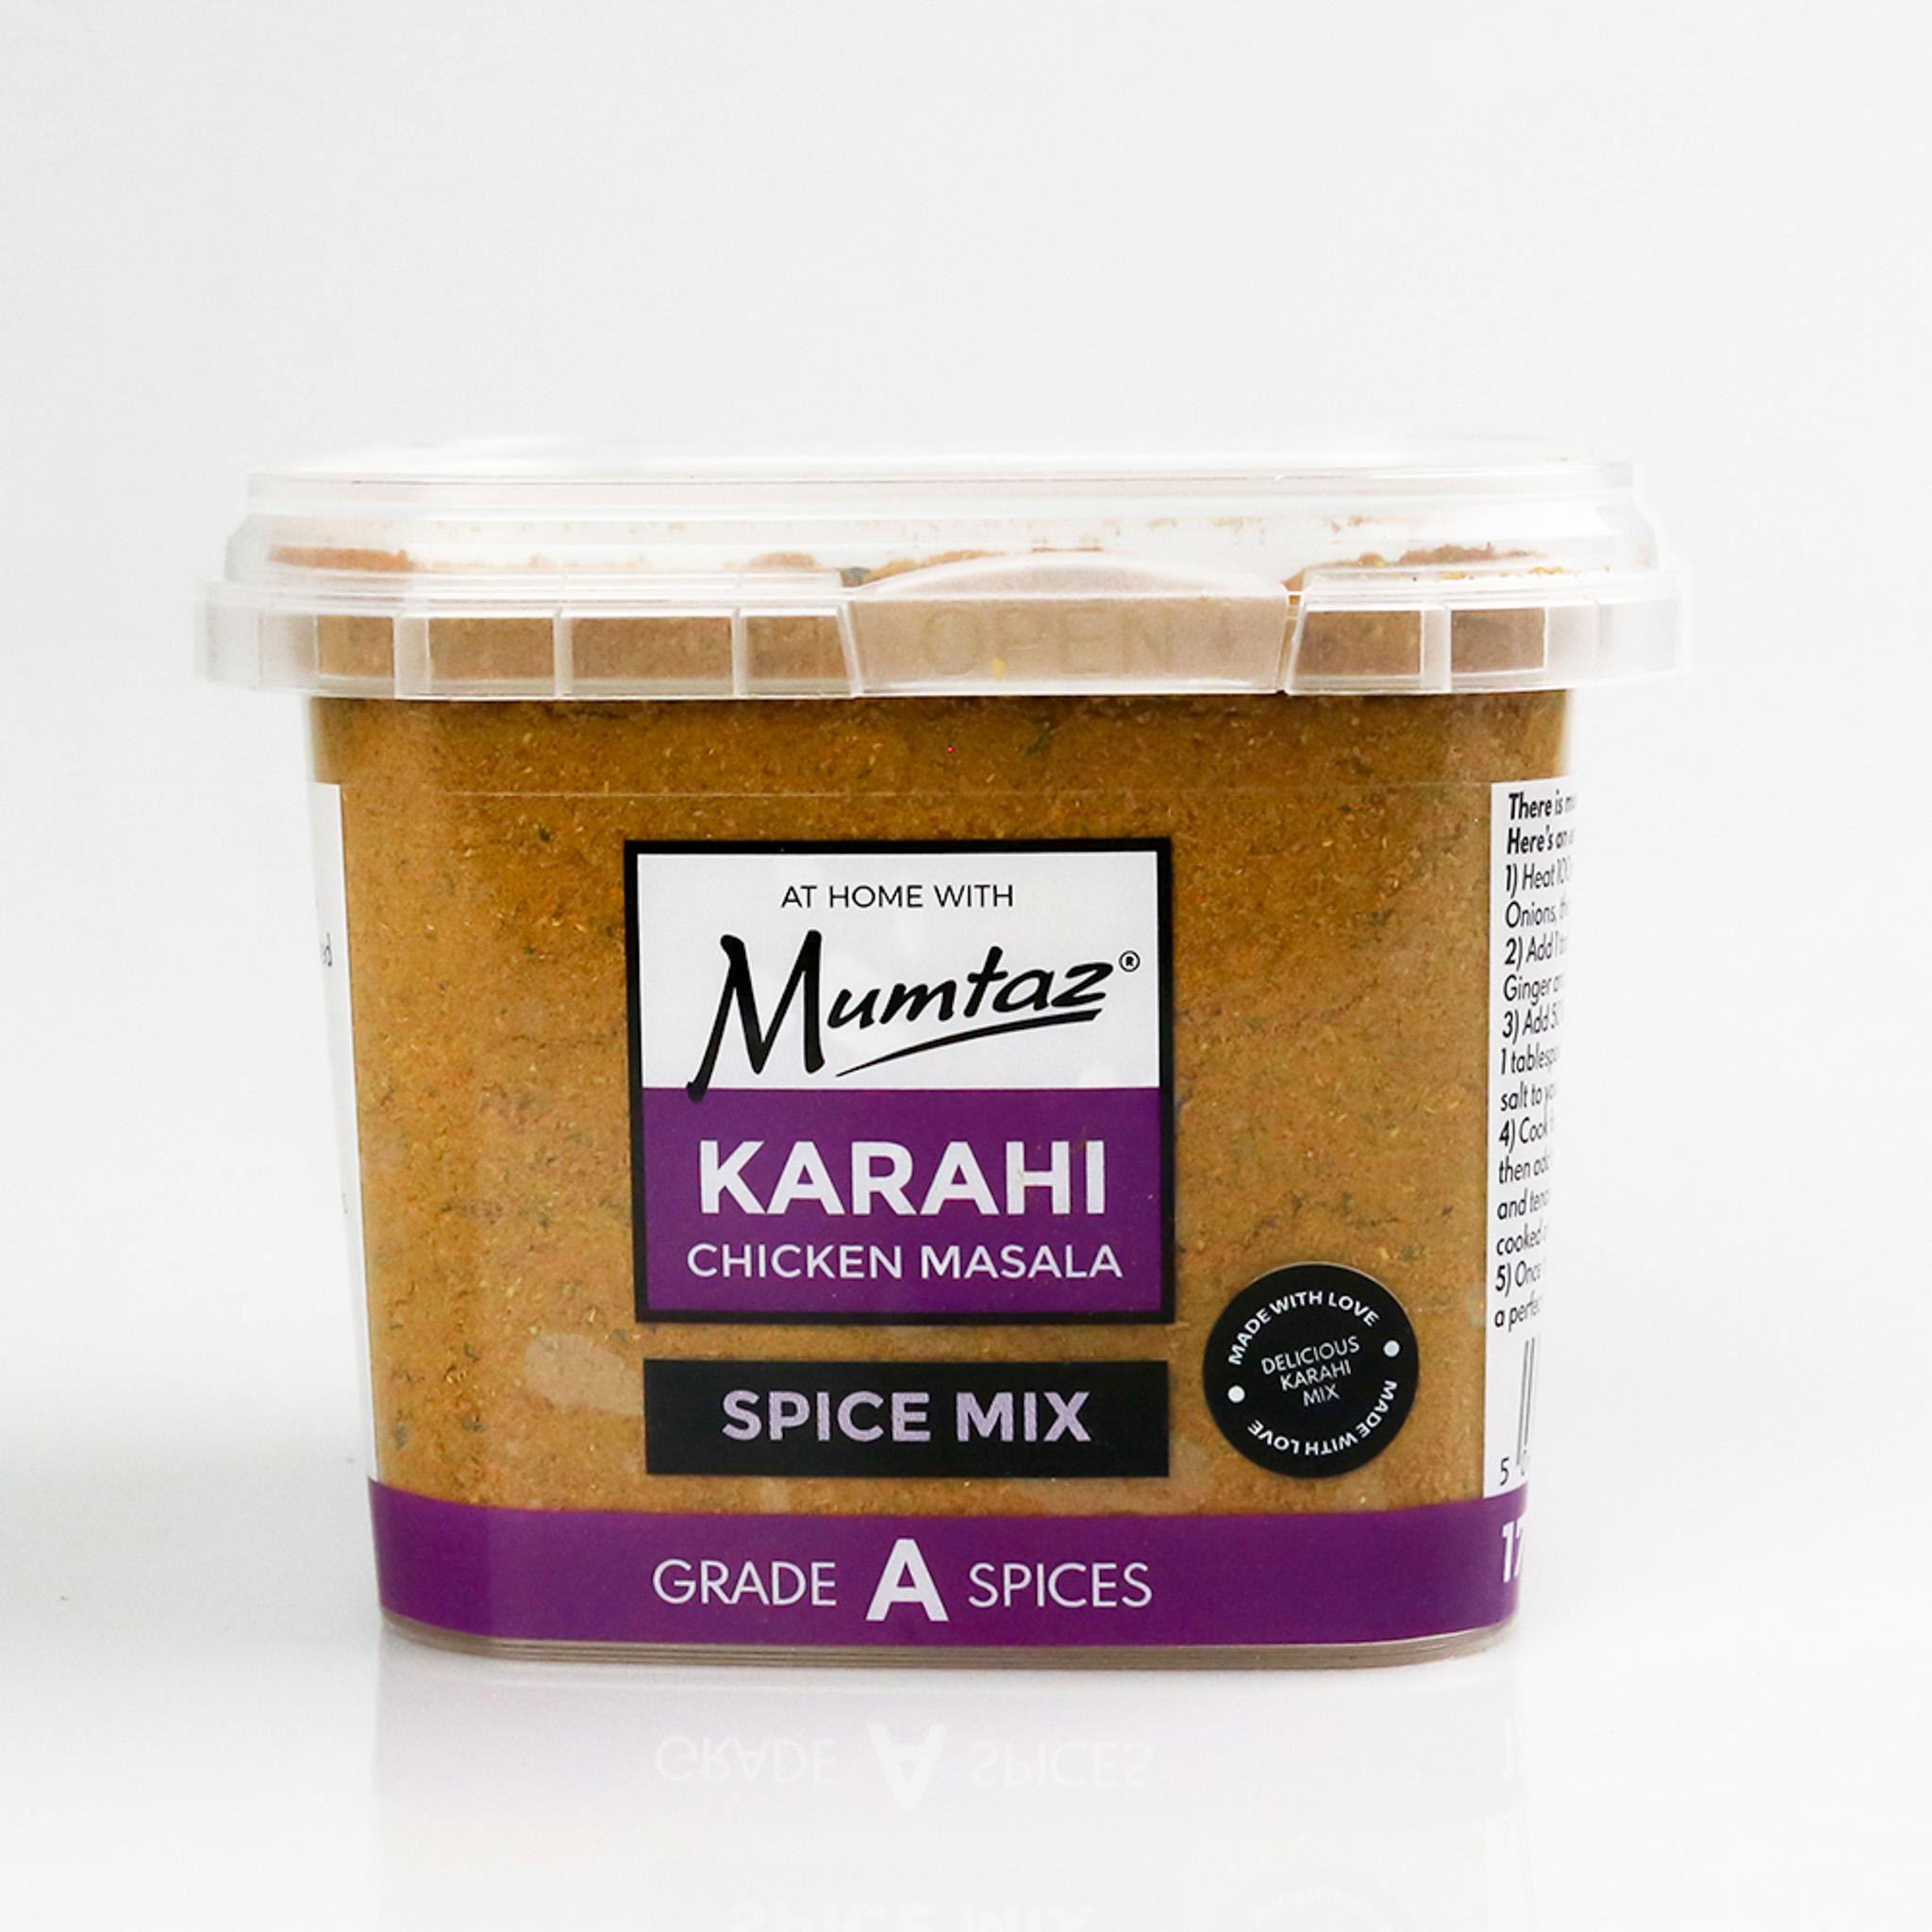 Mumtaz Karahi Chicken Masala Spice Mix - 175g